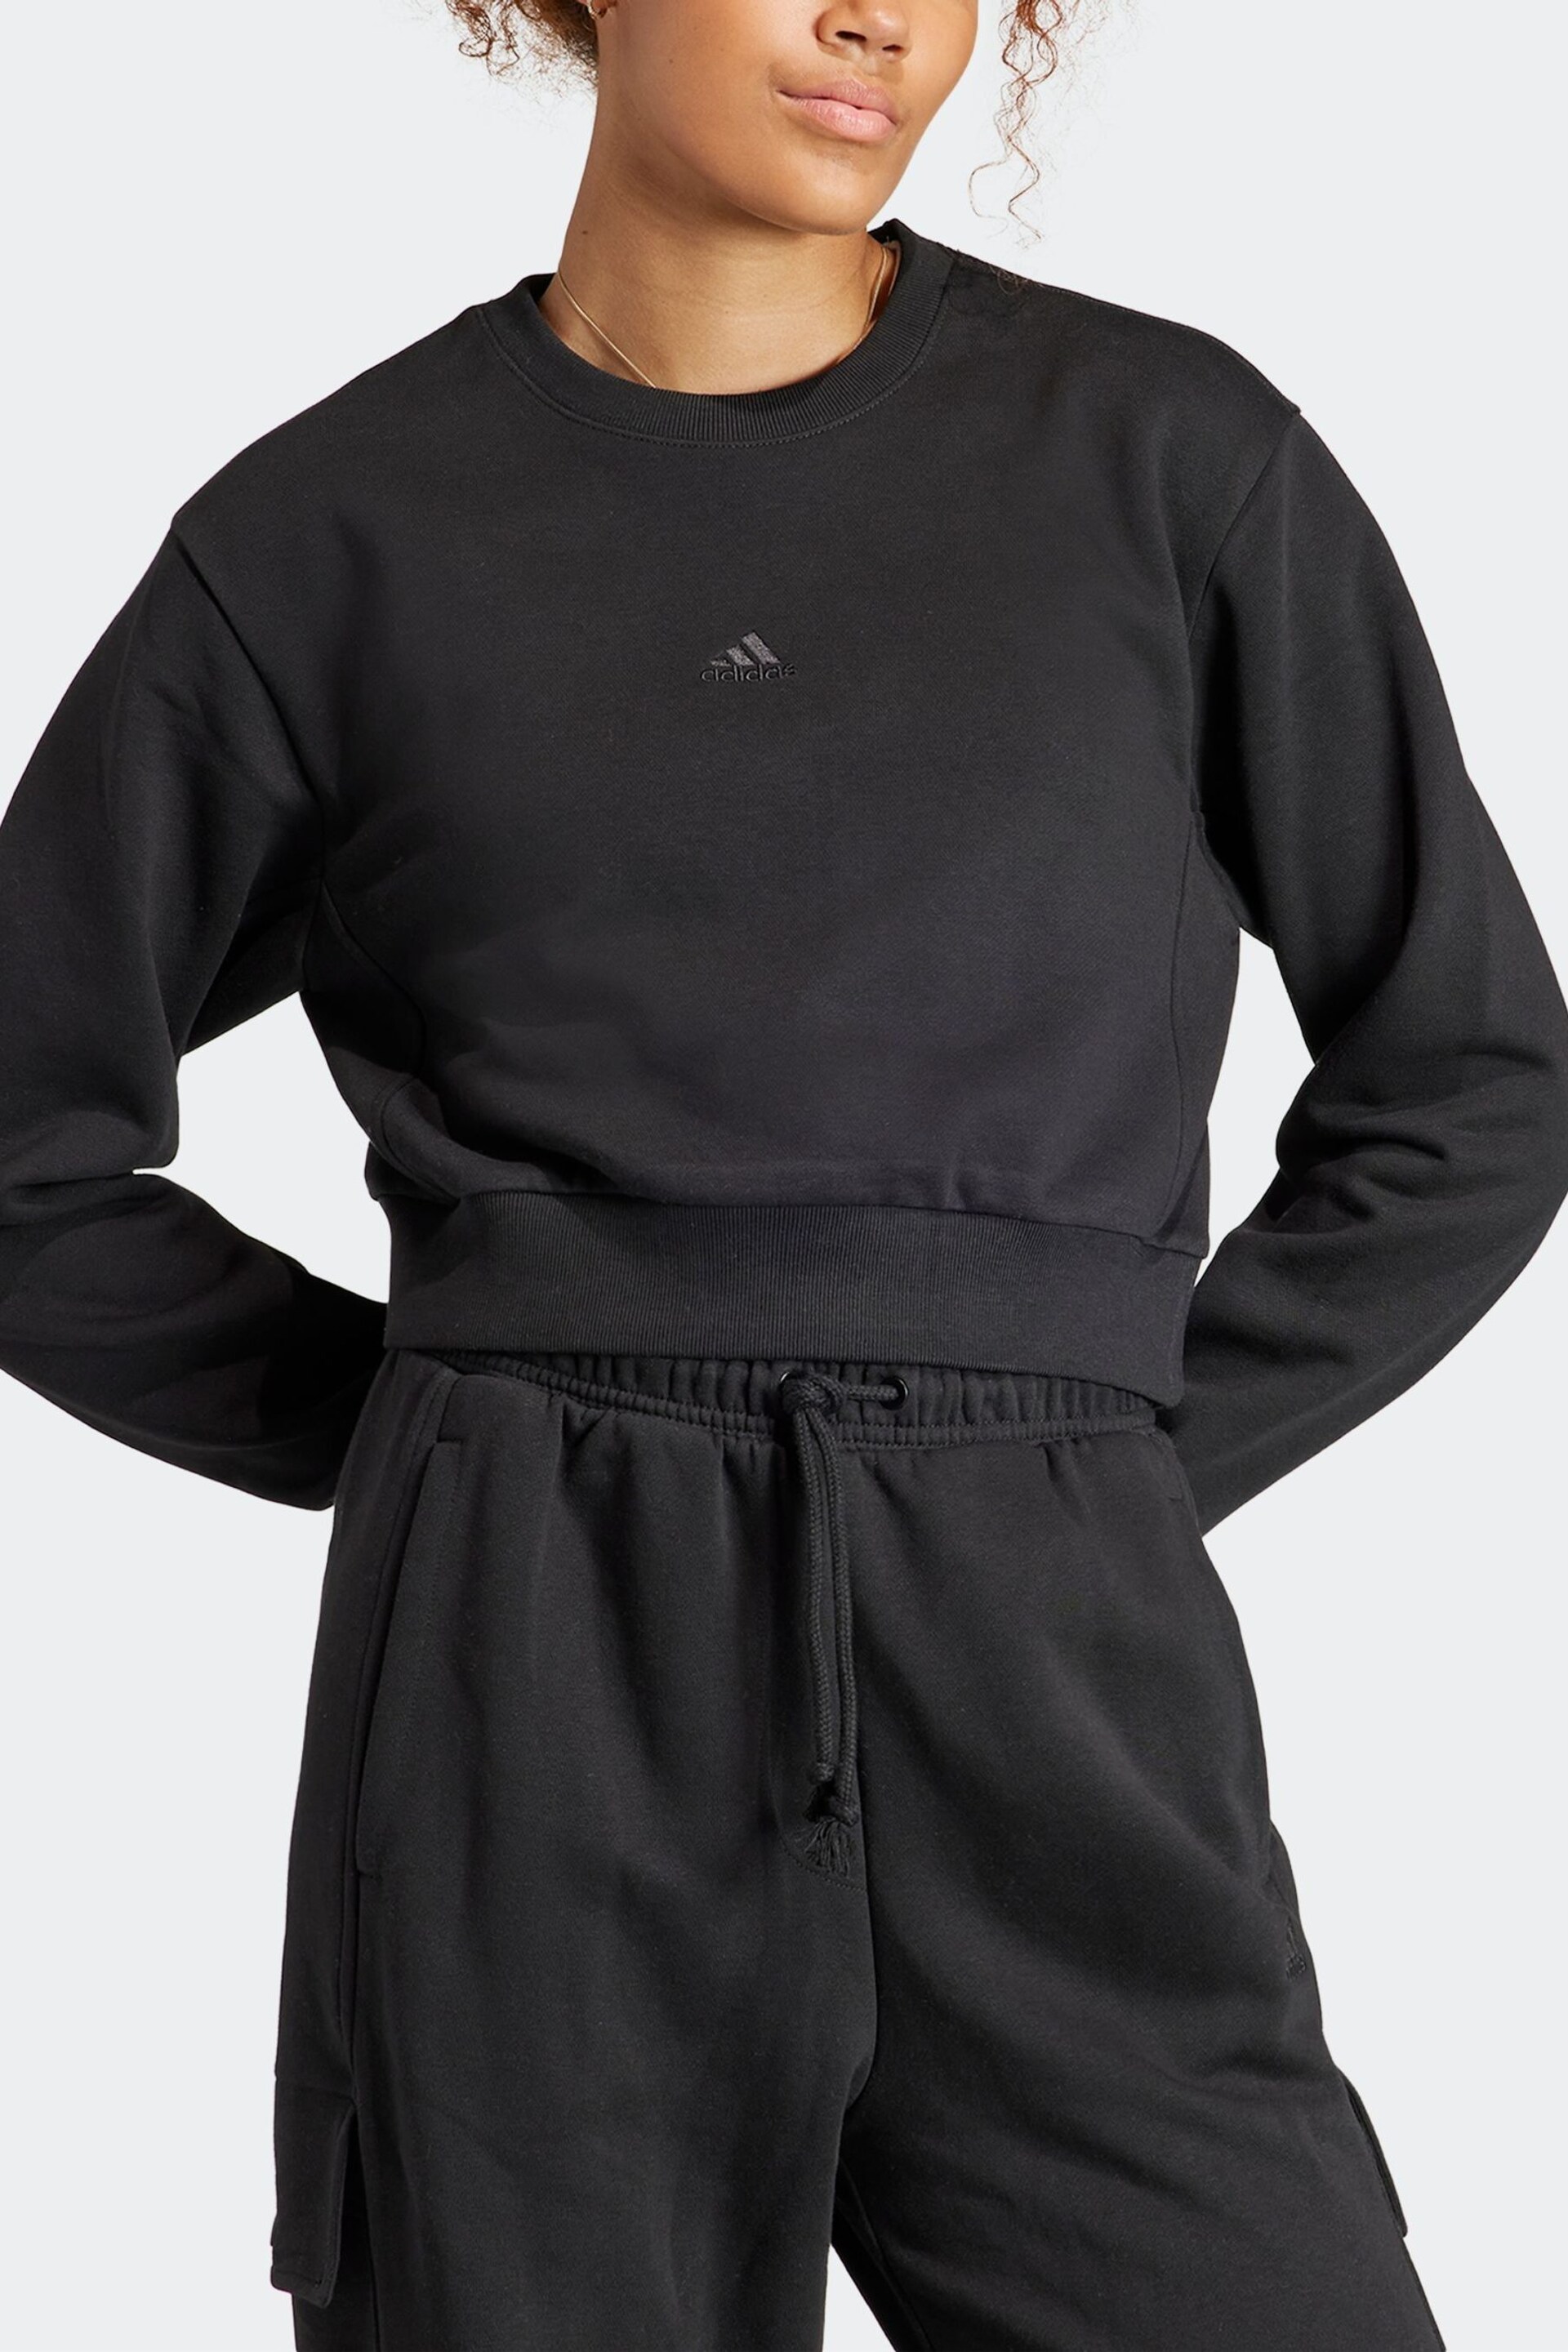 adidas Black Sportswear All Szn Fleece Crop Sweatshirt - Image 4 of 7